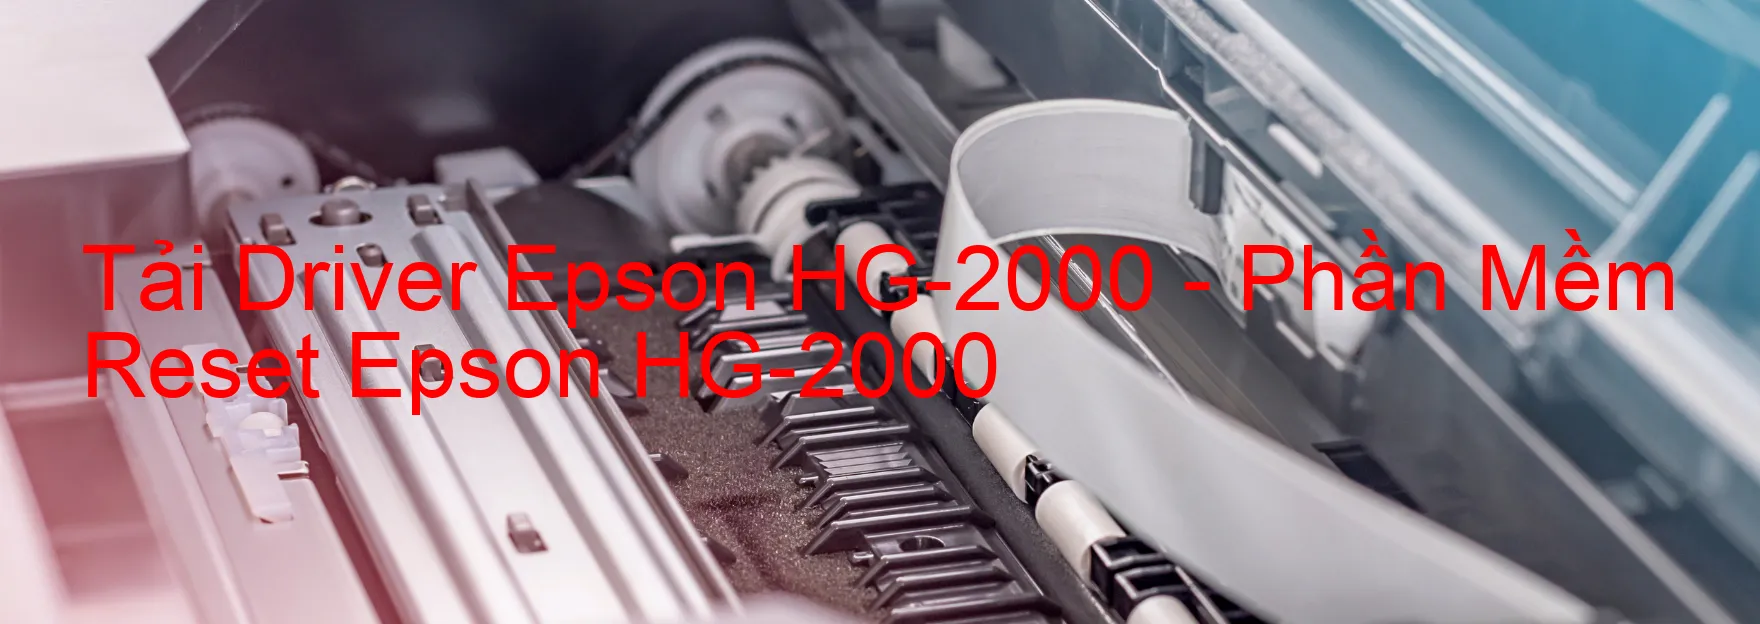 Driver Epson HG-2000, Phần Mềm Reset Epson HG-2000